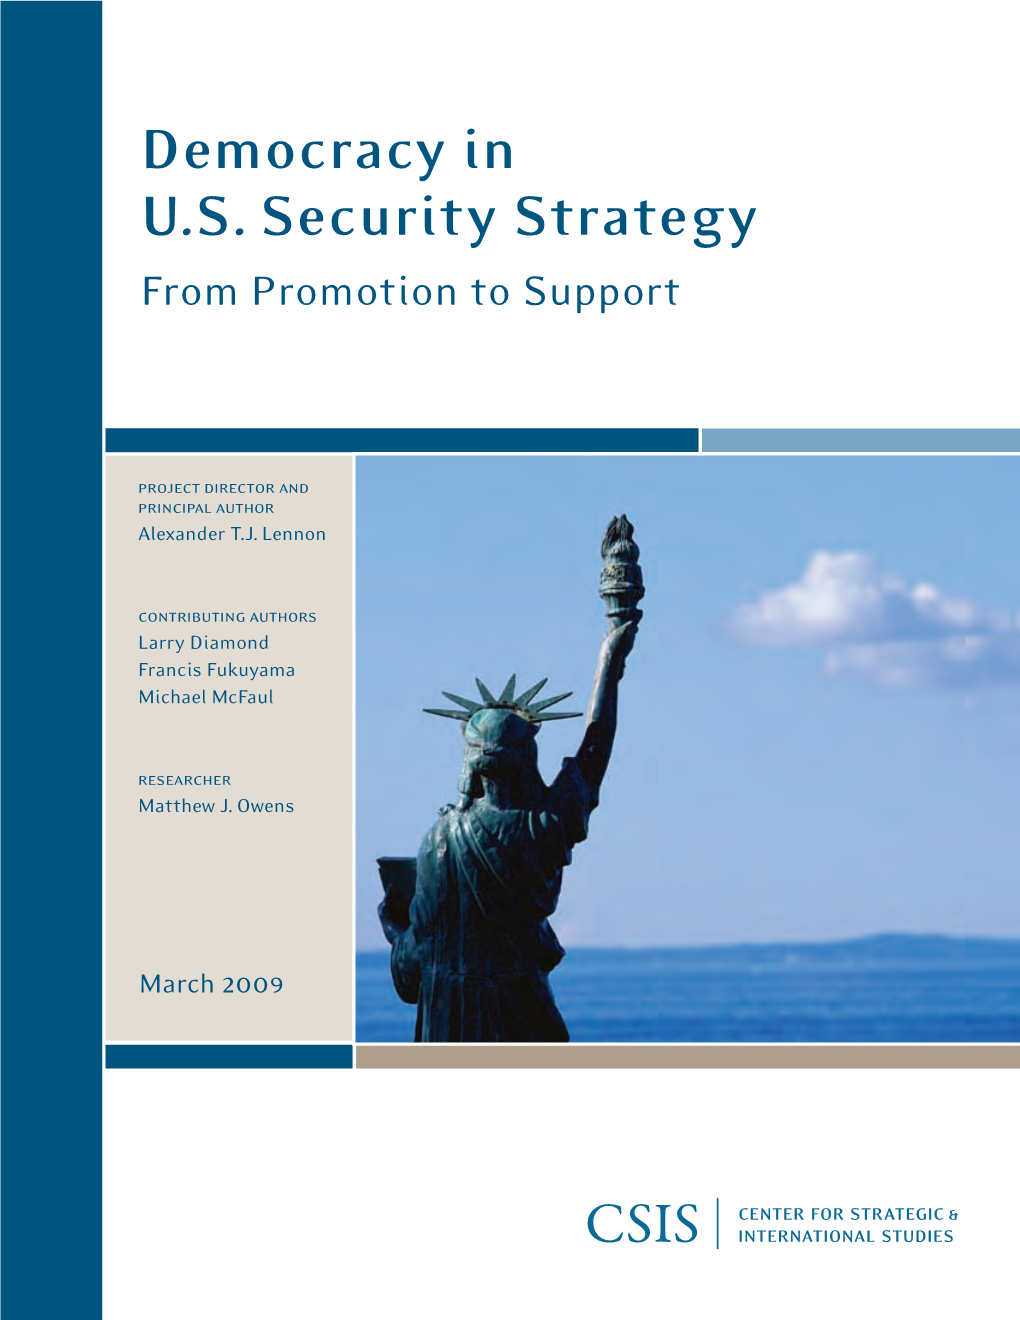 Democracy in U.S. Security Strategy